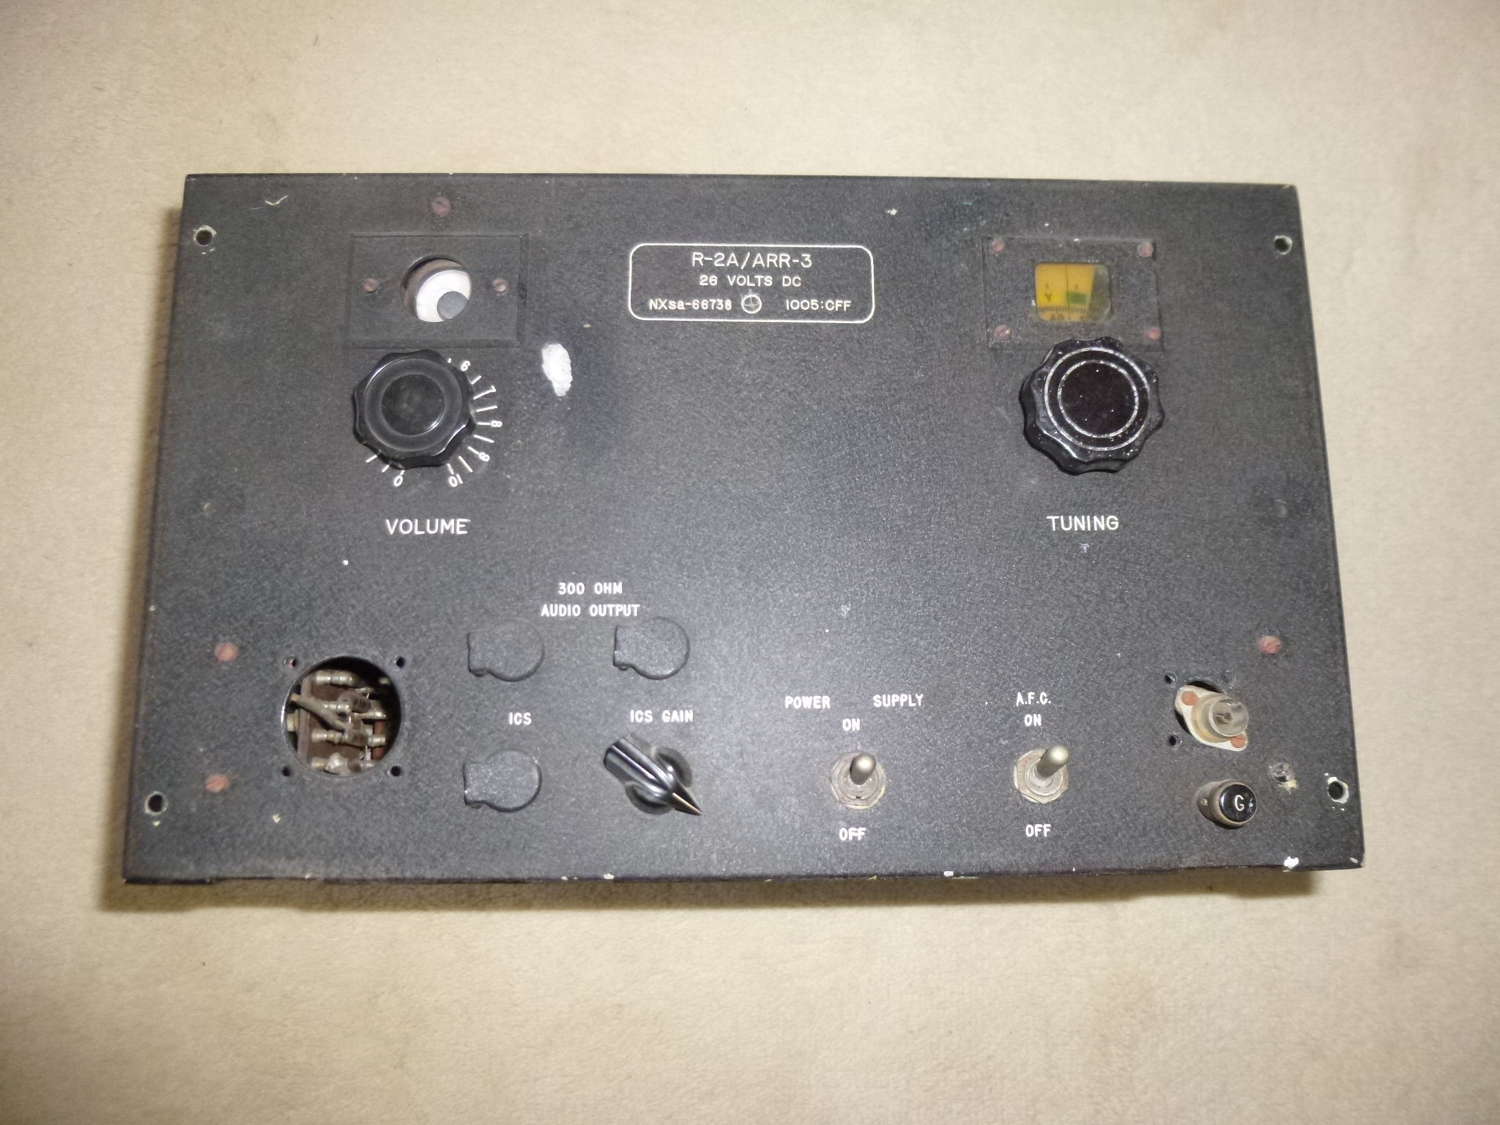 R-2A/APR-3 sonobuoy receiver